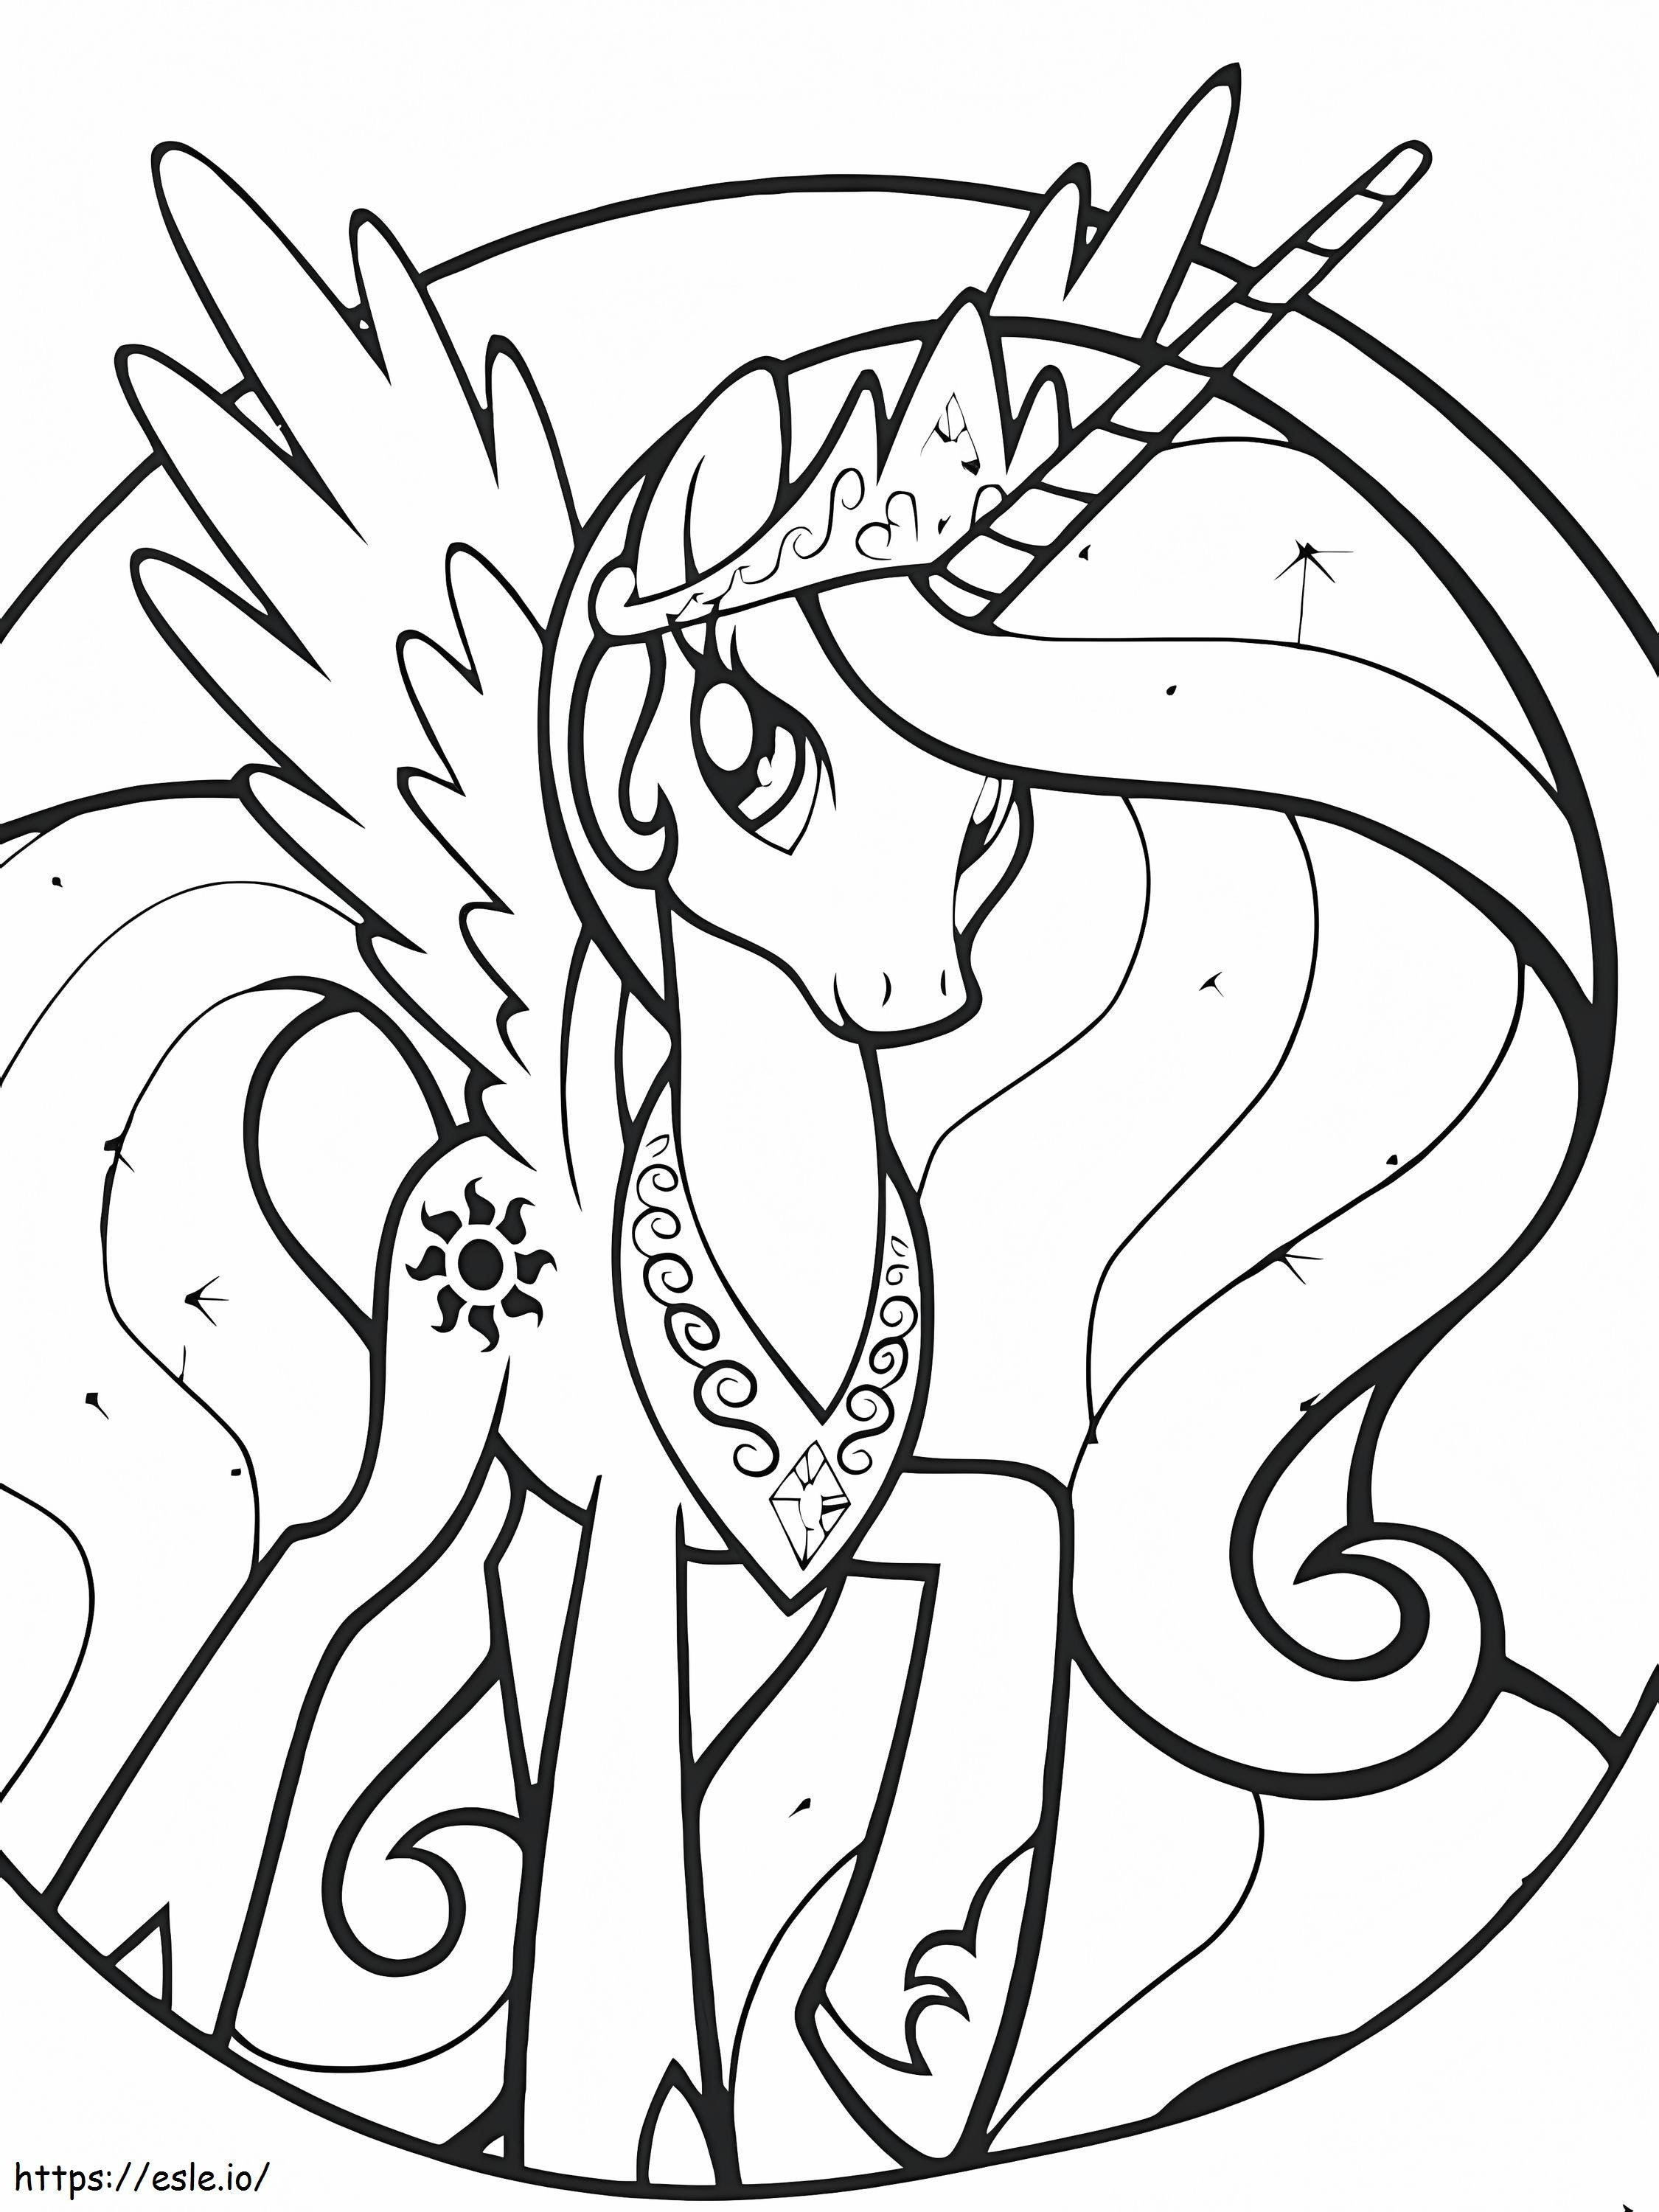 Wonderful Princess Celestia coloring page